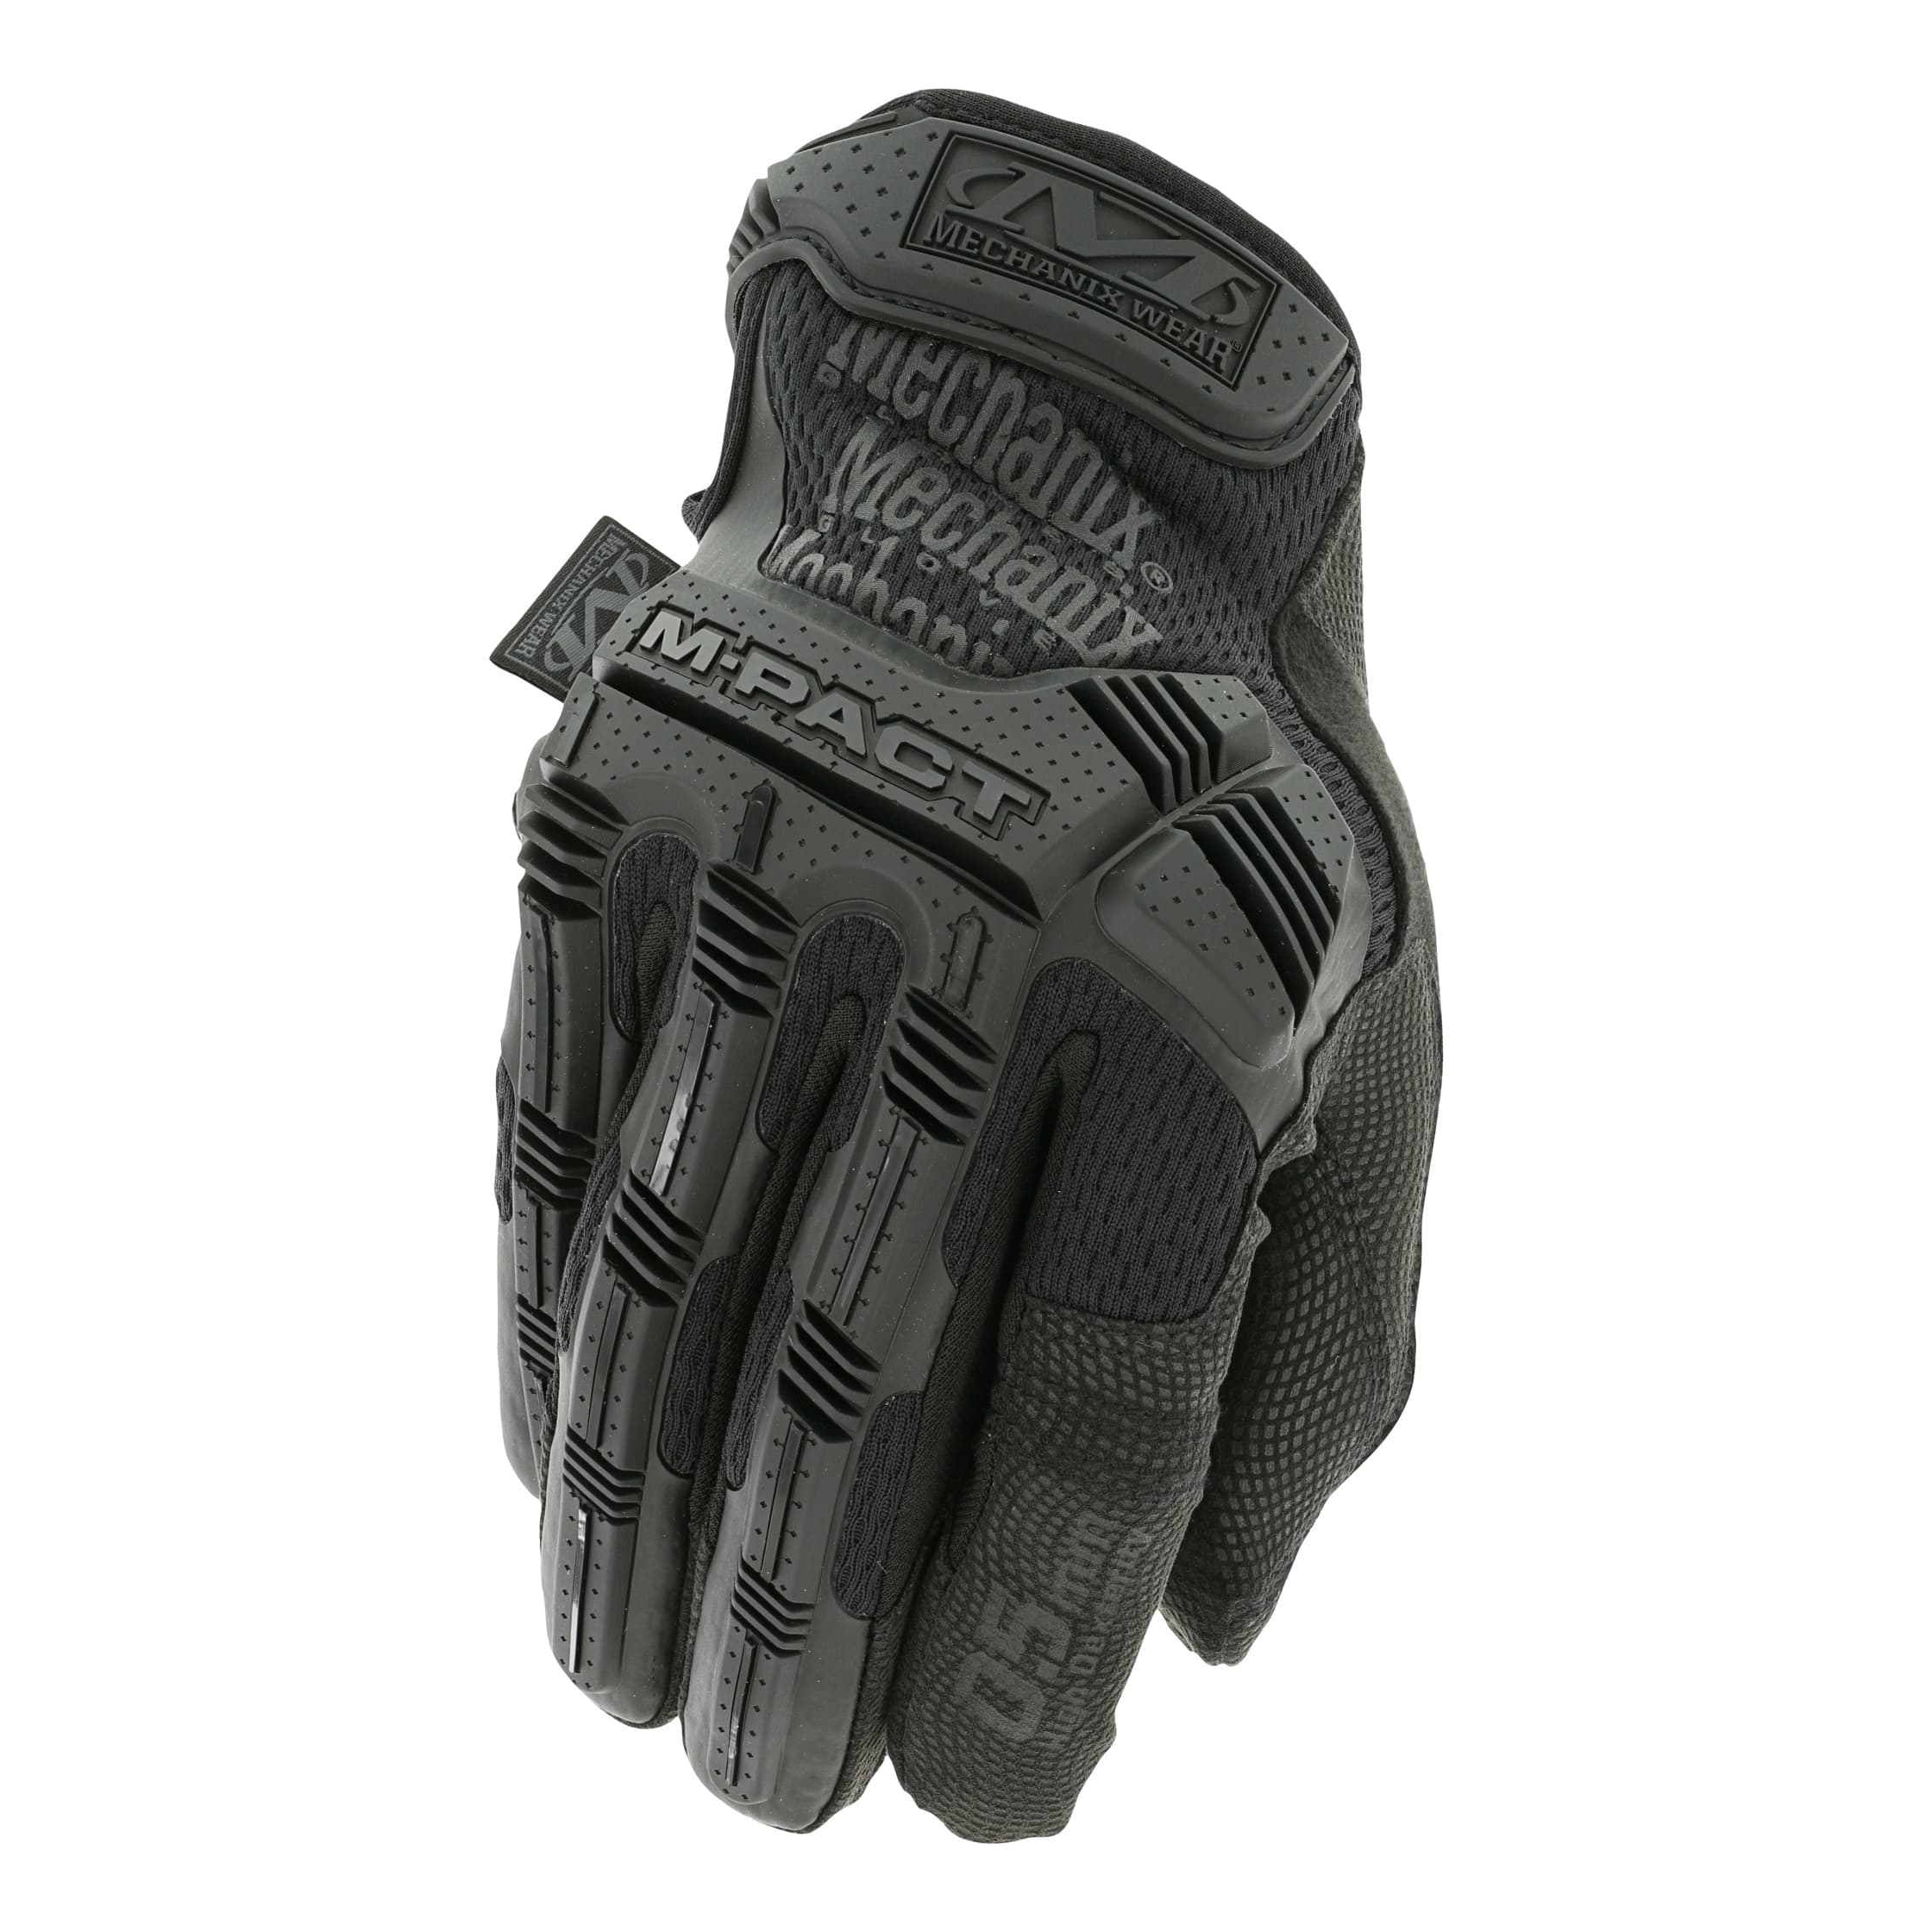 Mechanix Wear Original High Performance Work Glove Black, Assorted Sizes